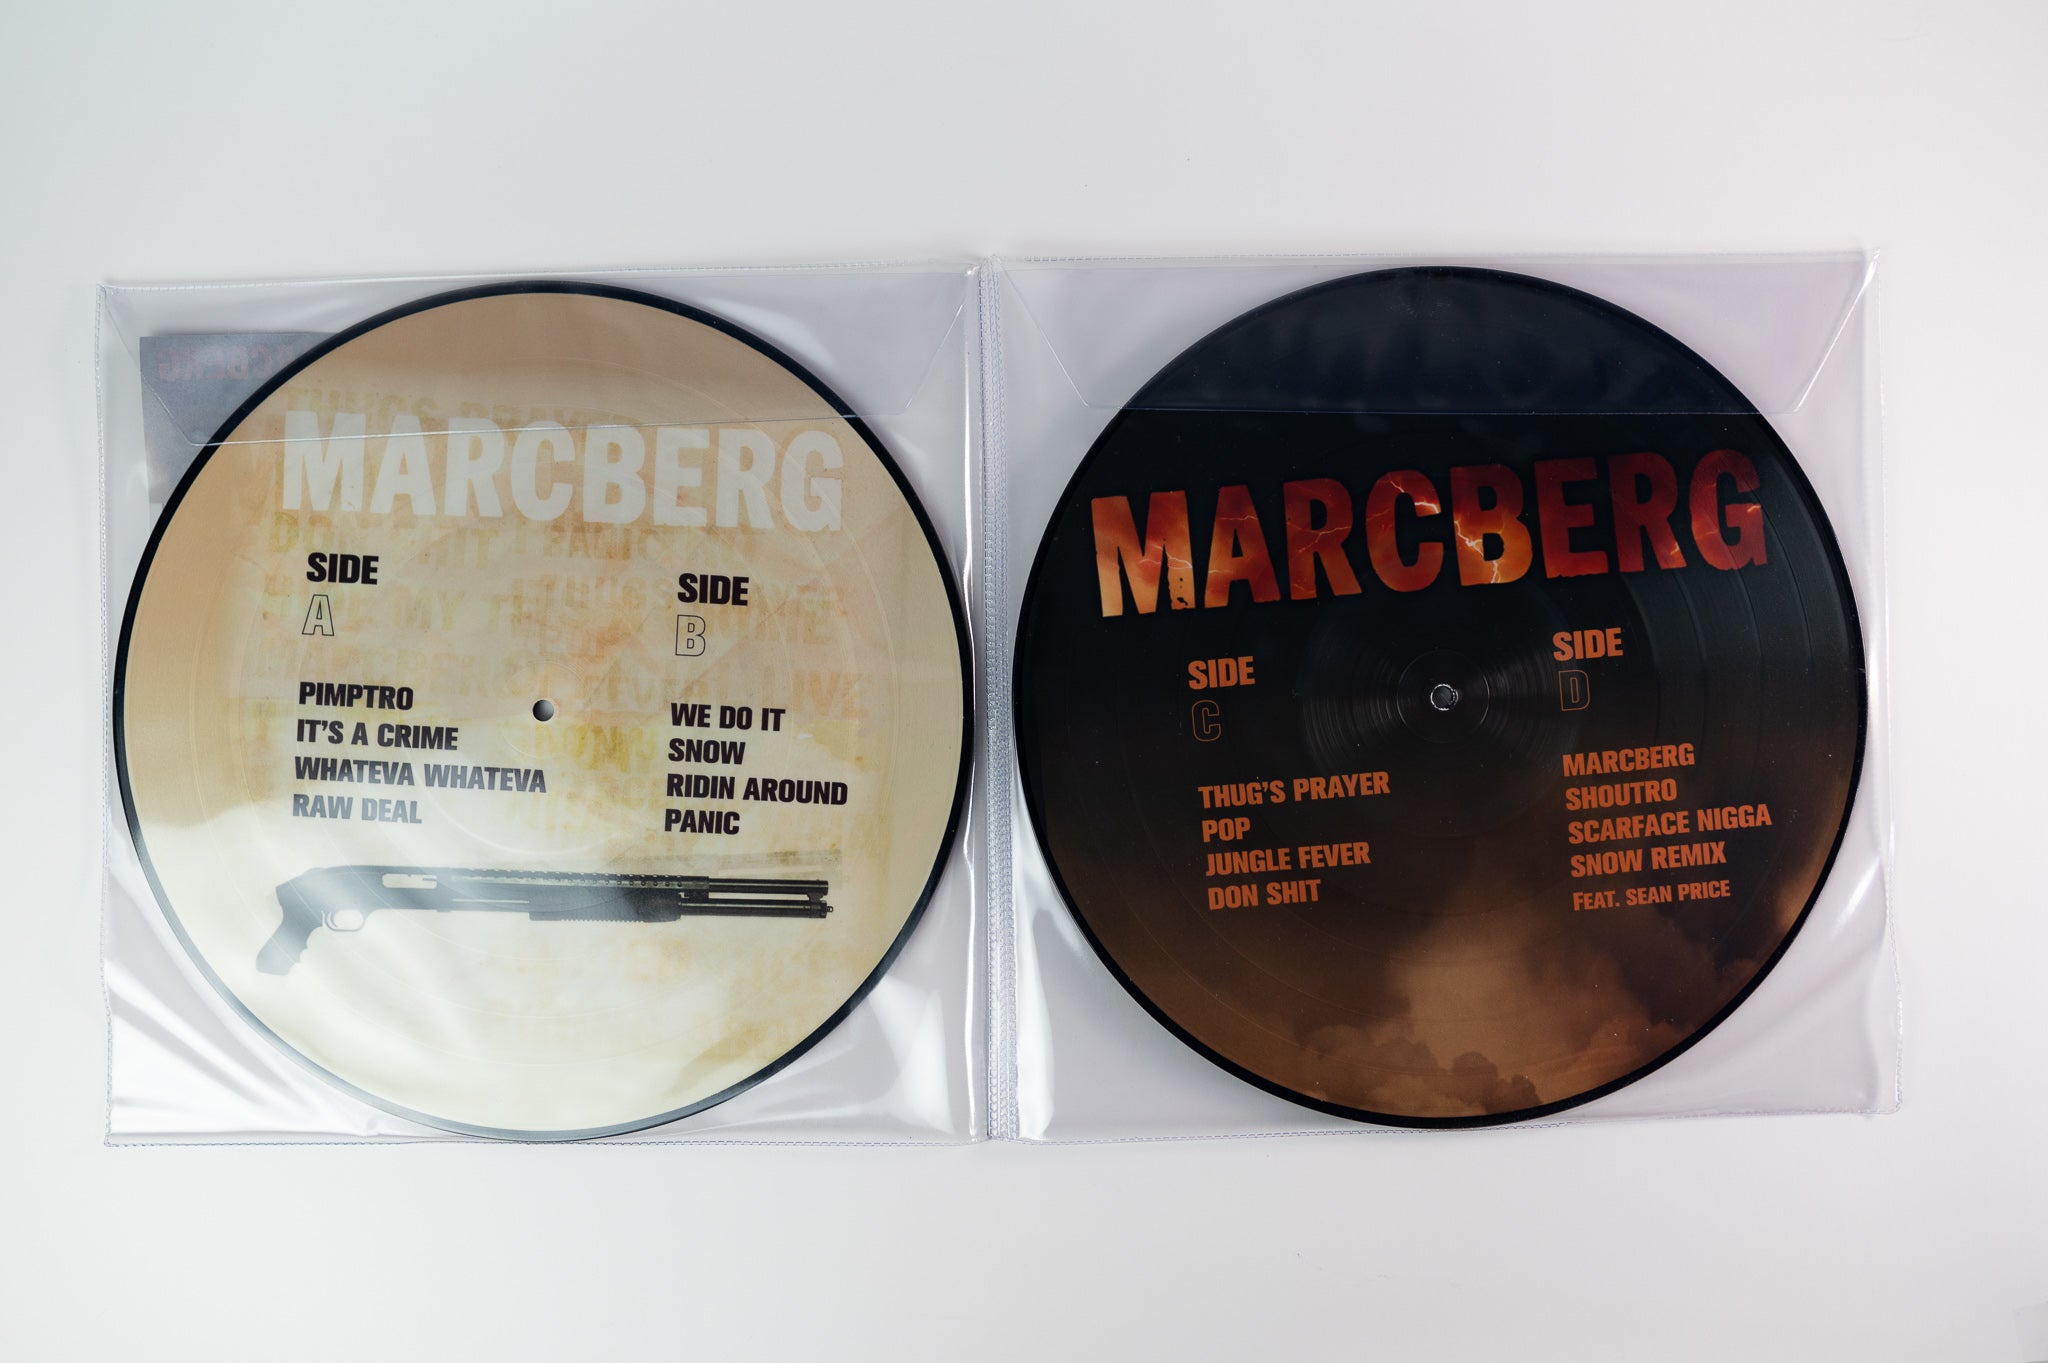 Roc Marciano - Marcberg on Marci Enterprises 10th Anniversary Picture Disc Reissue